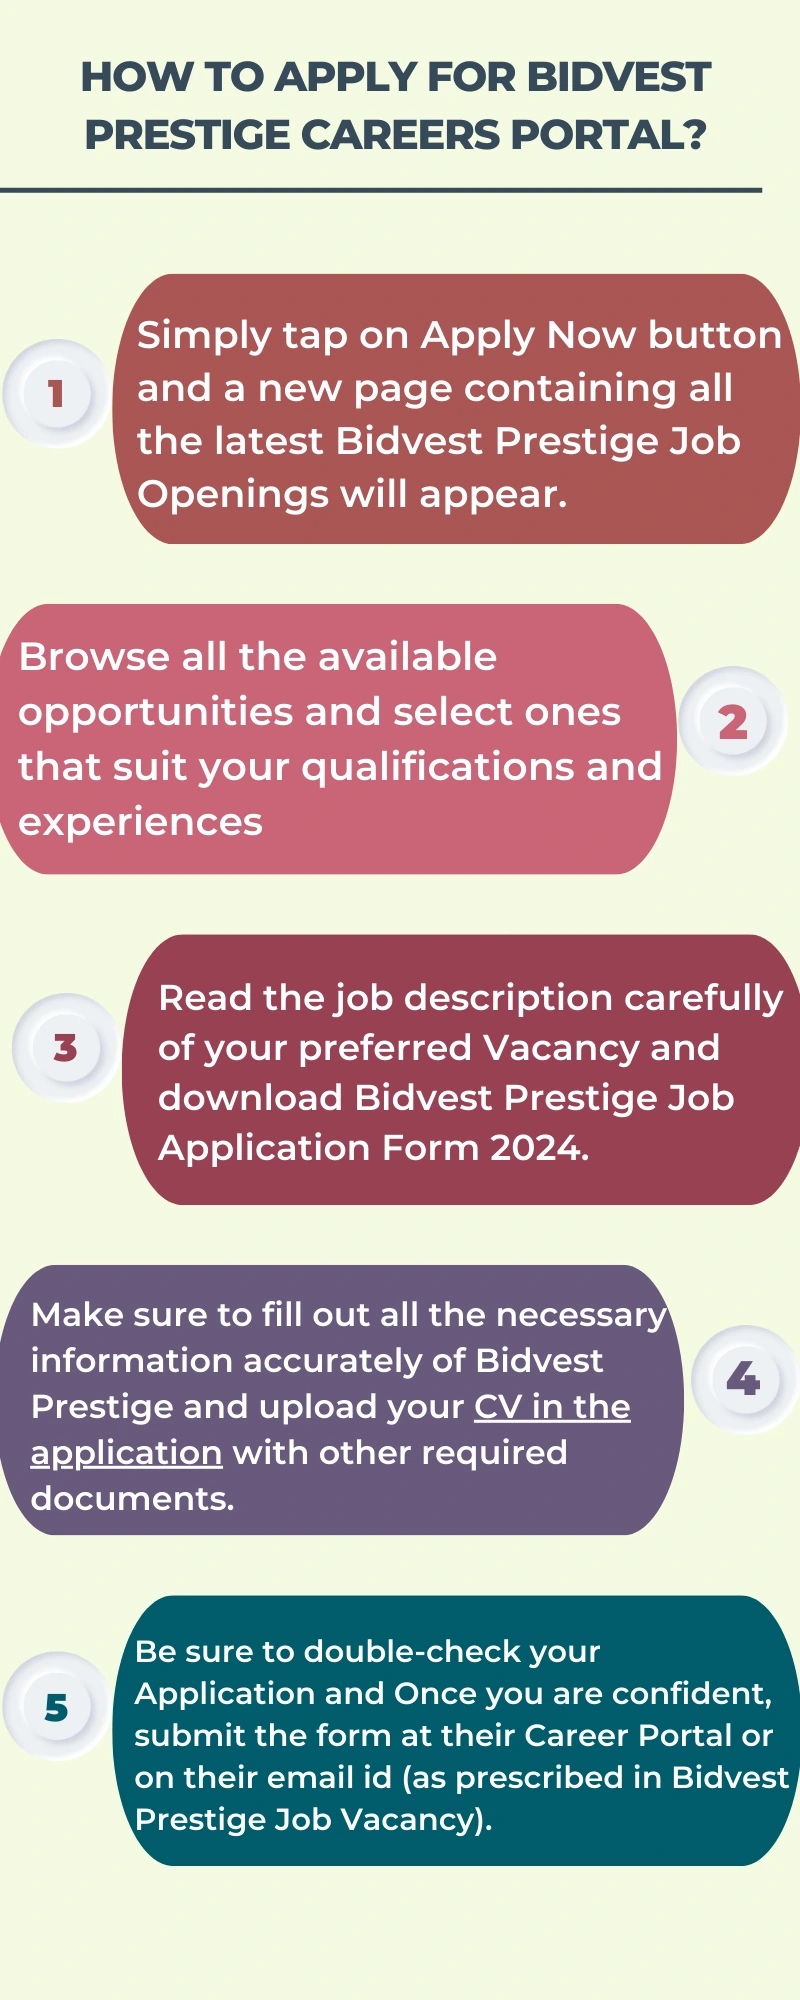 How To Apply for Bidvest Prestige Careers Portal?